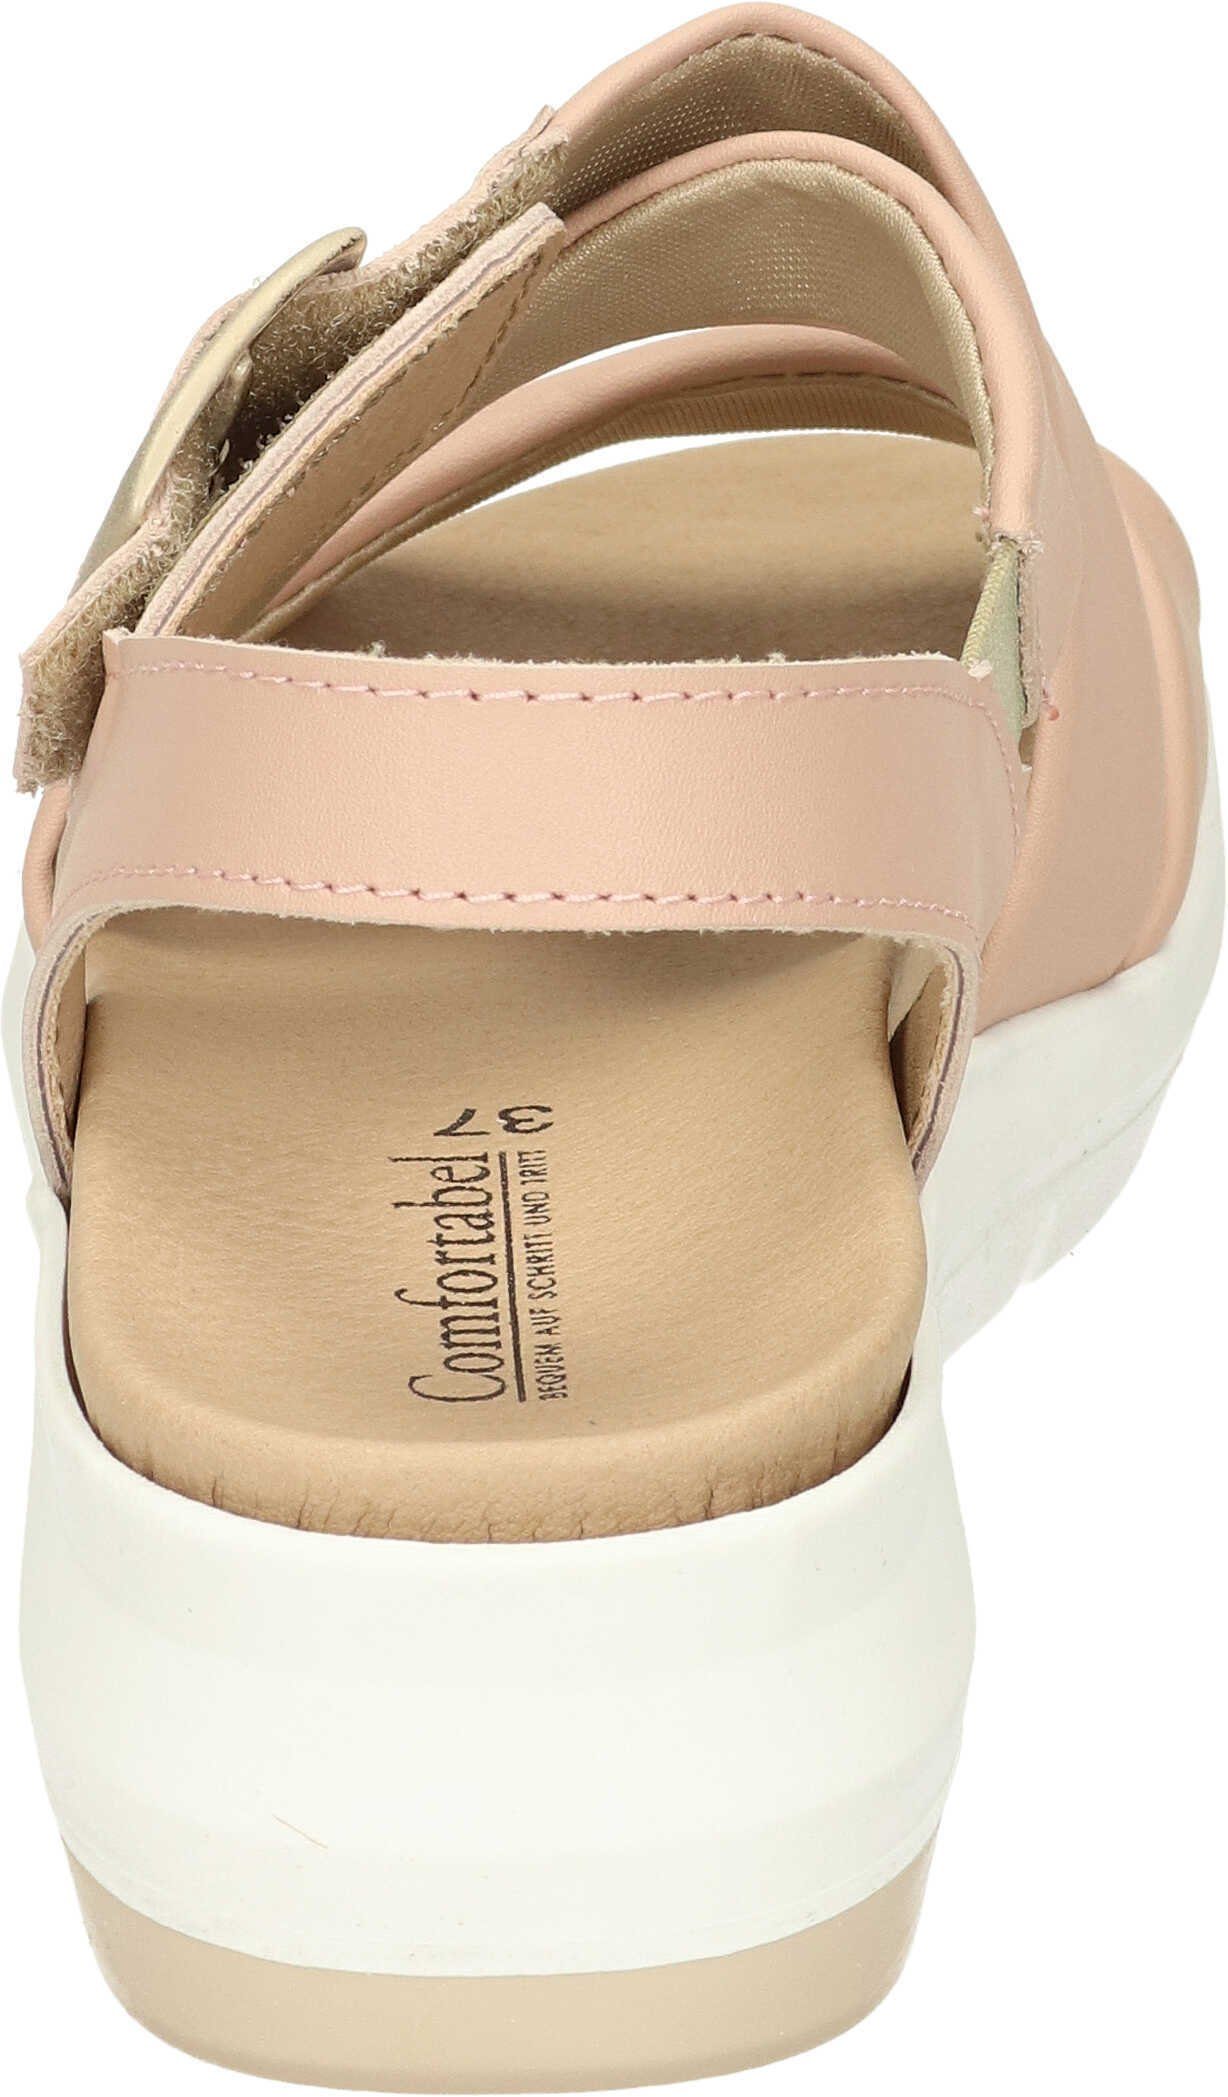 Sandalen Sandale Gummizug Comfortabel mit rosa